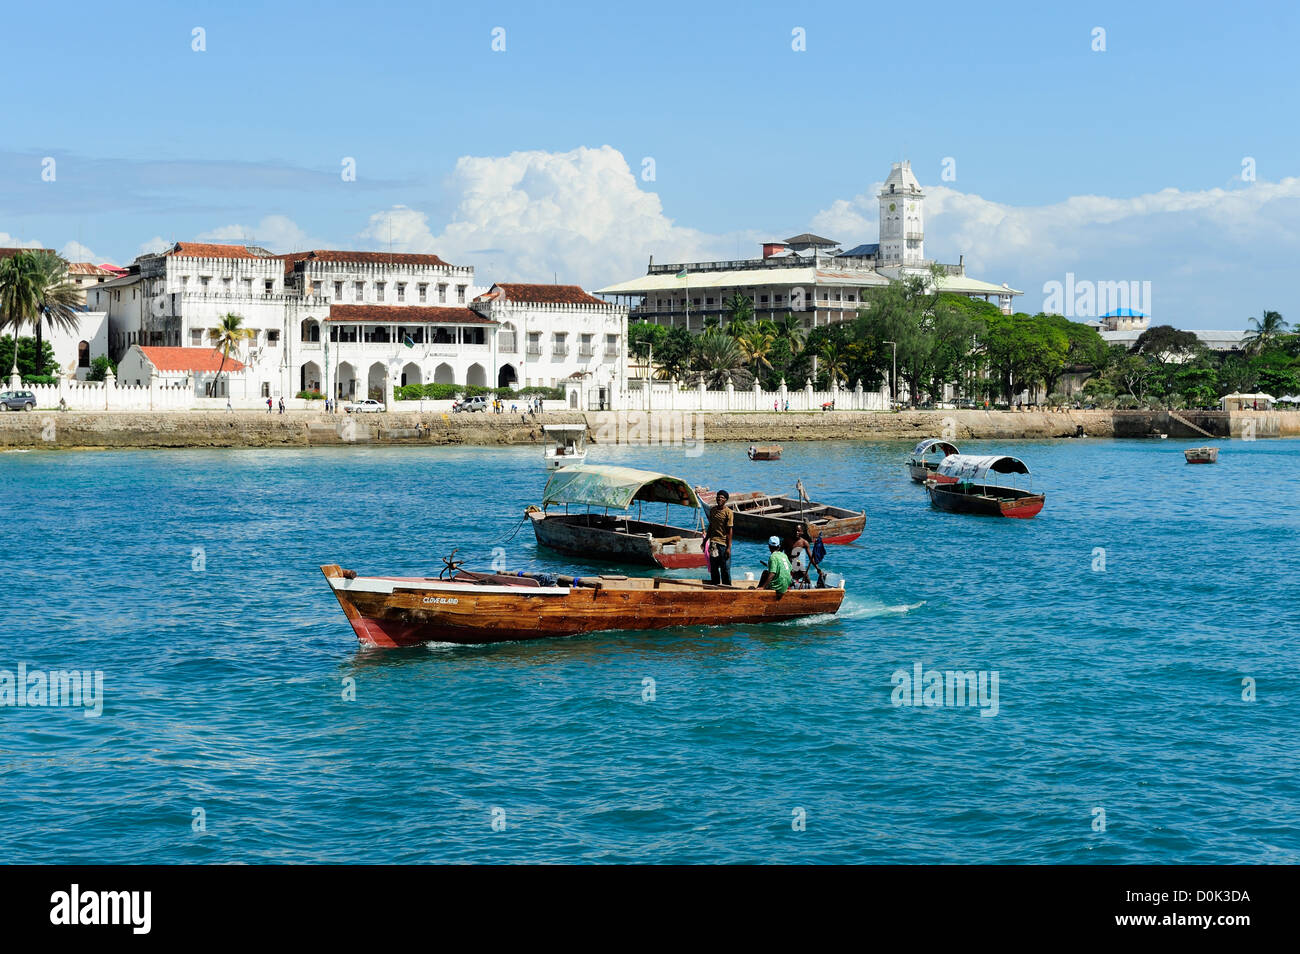 Beit al-Ajaib Palace and waterfront at Stone Town, Zanzibar, Tanzania, East Africa Stock Photo